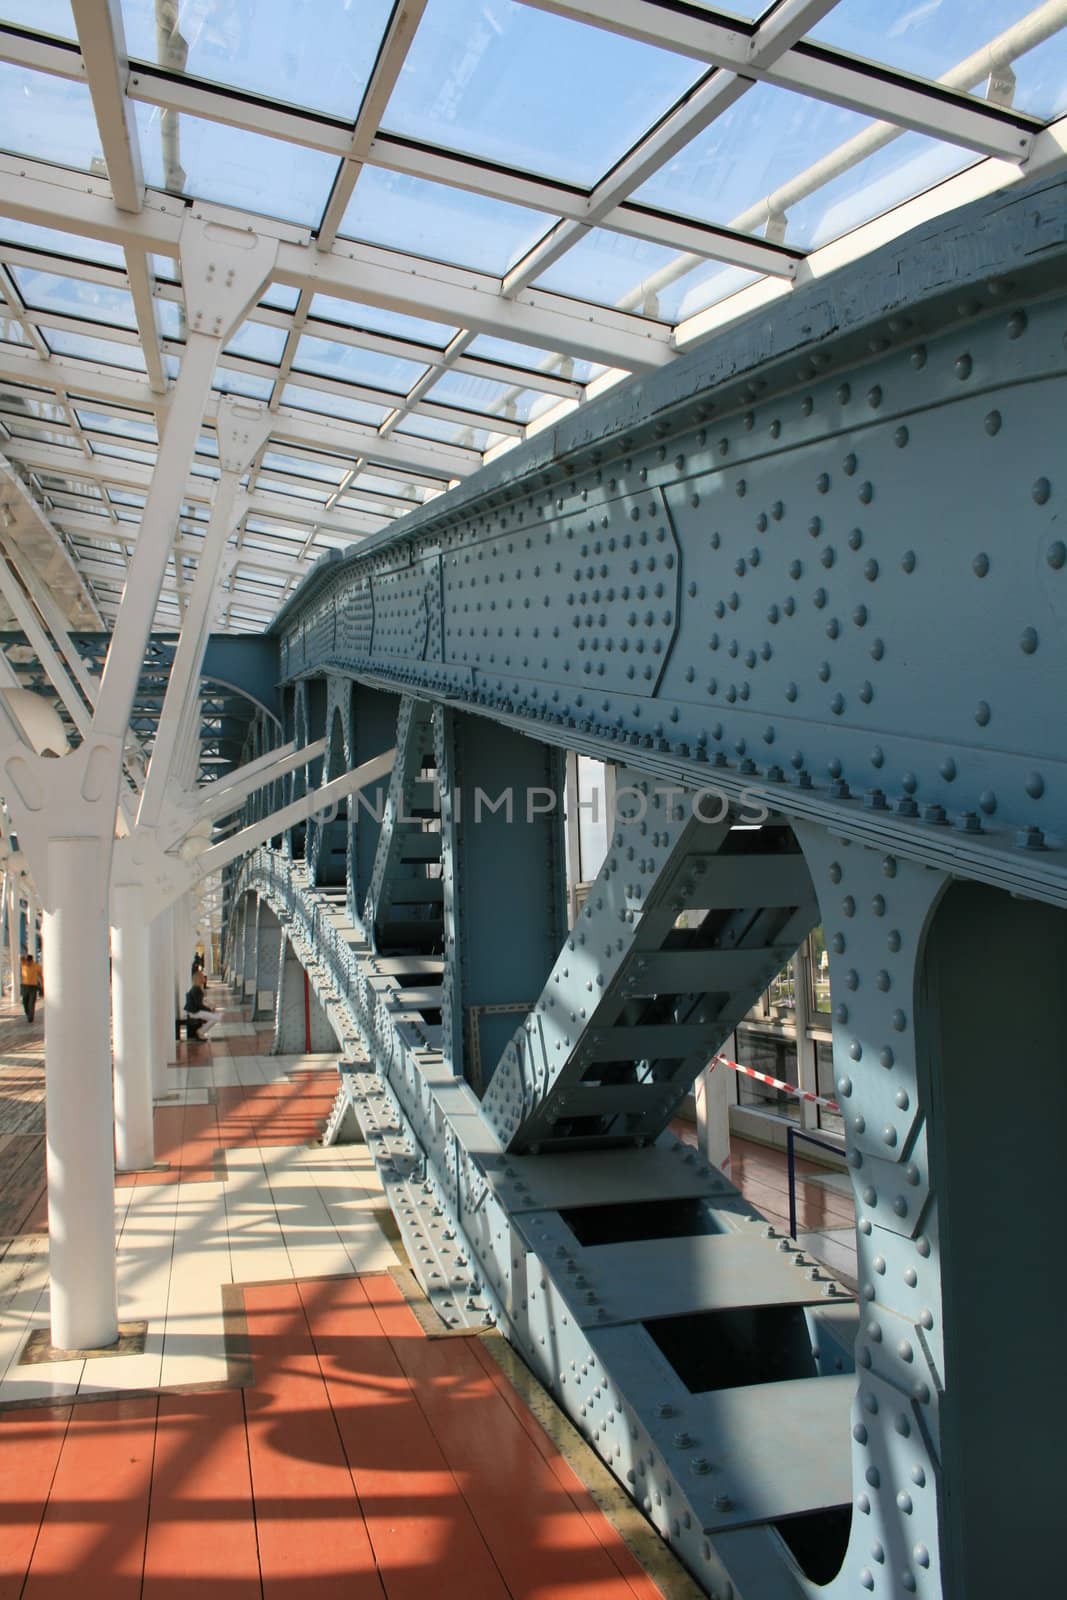 Metal details of the bridge